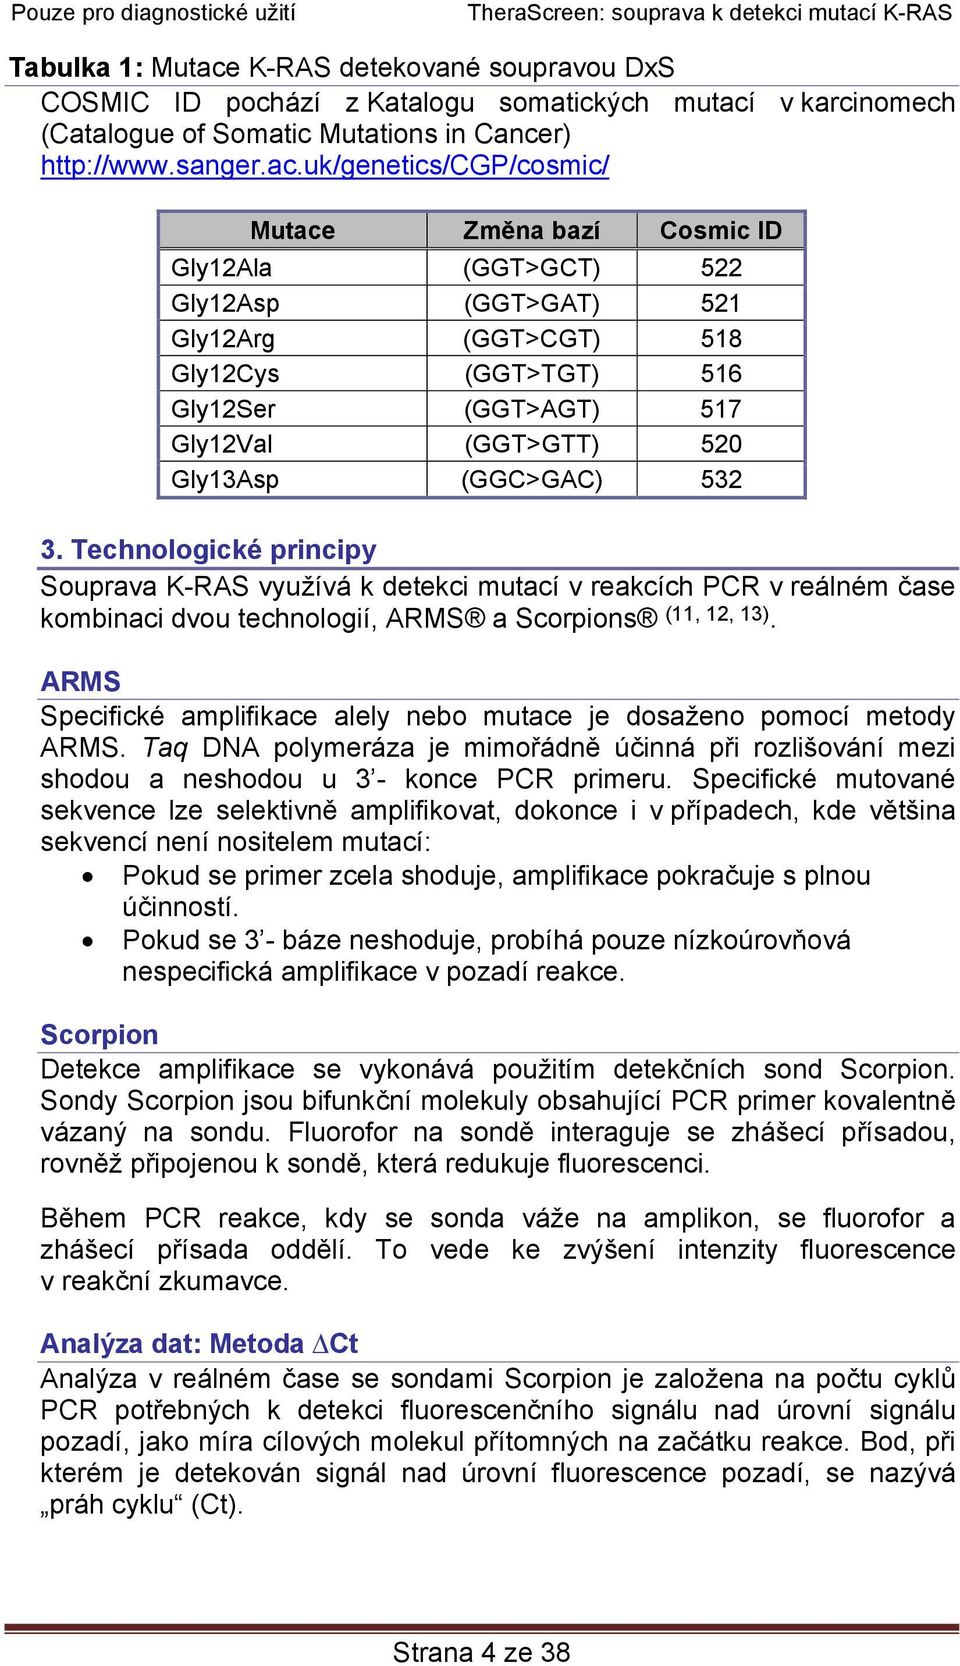 v karcinomech (Catalogue of Somatic Mutations in Cancer) http://www.sanger.ac.